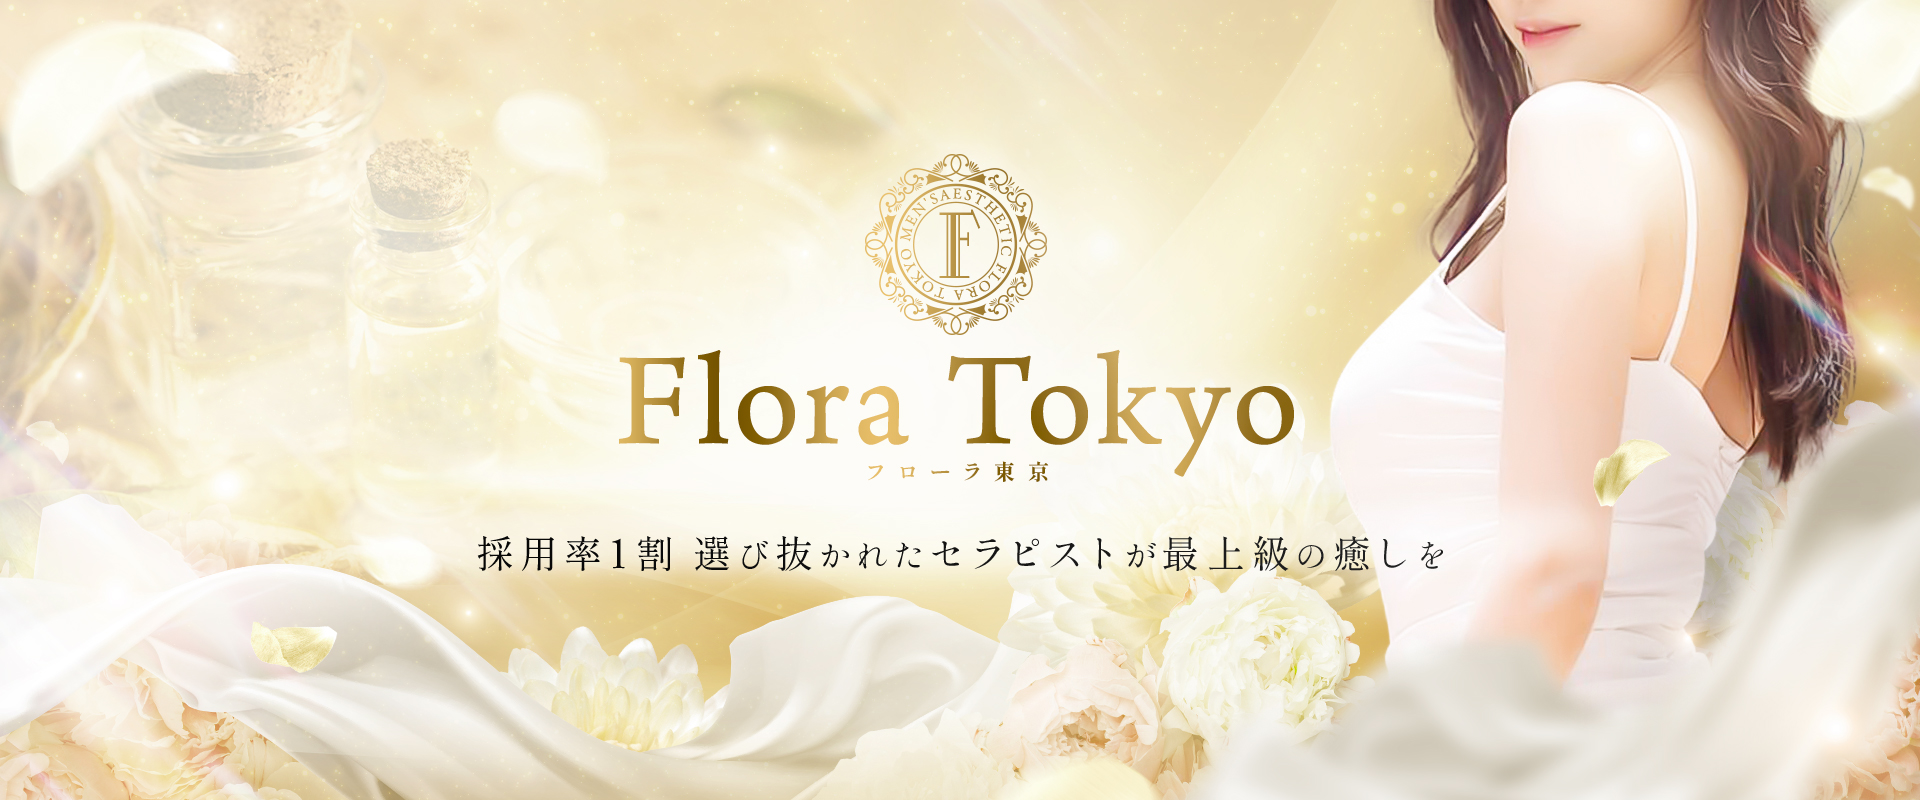 Flora Tokyo フローラ東京